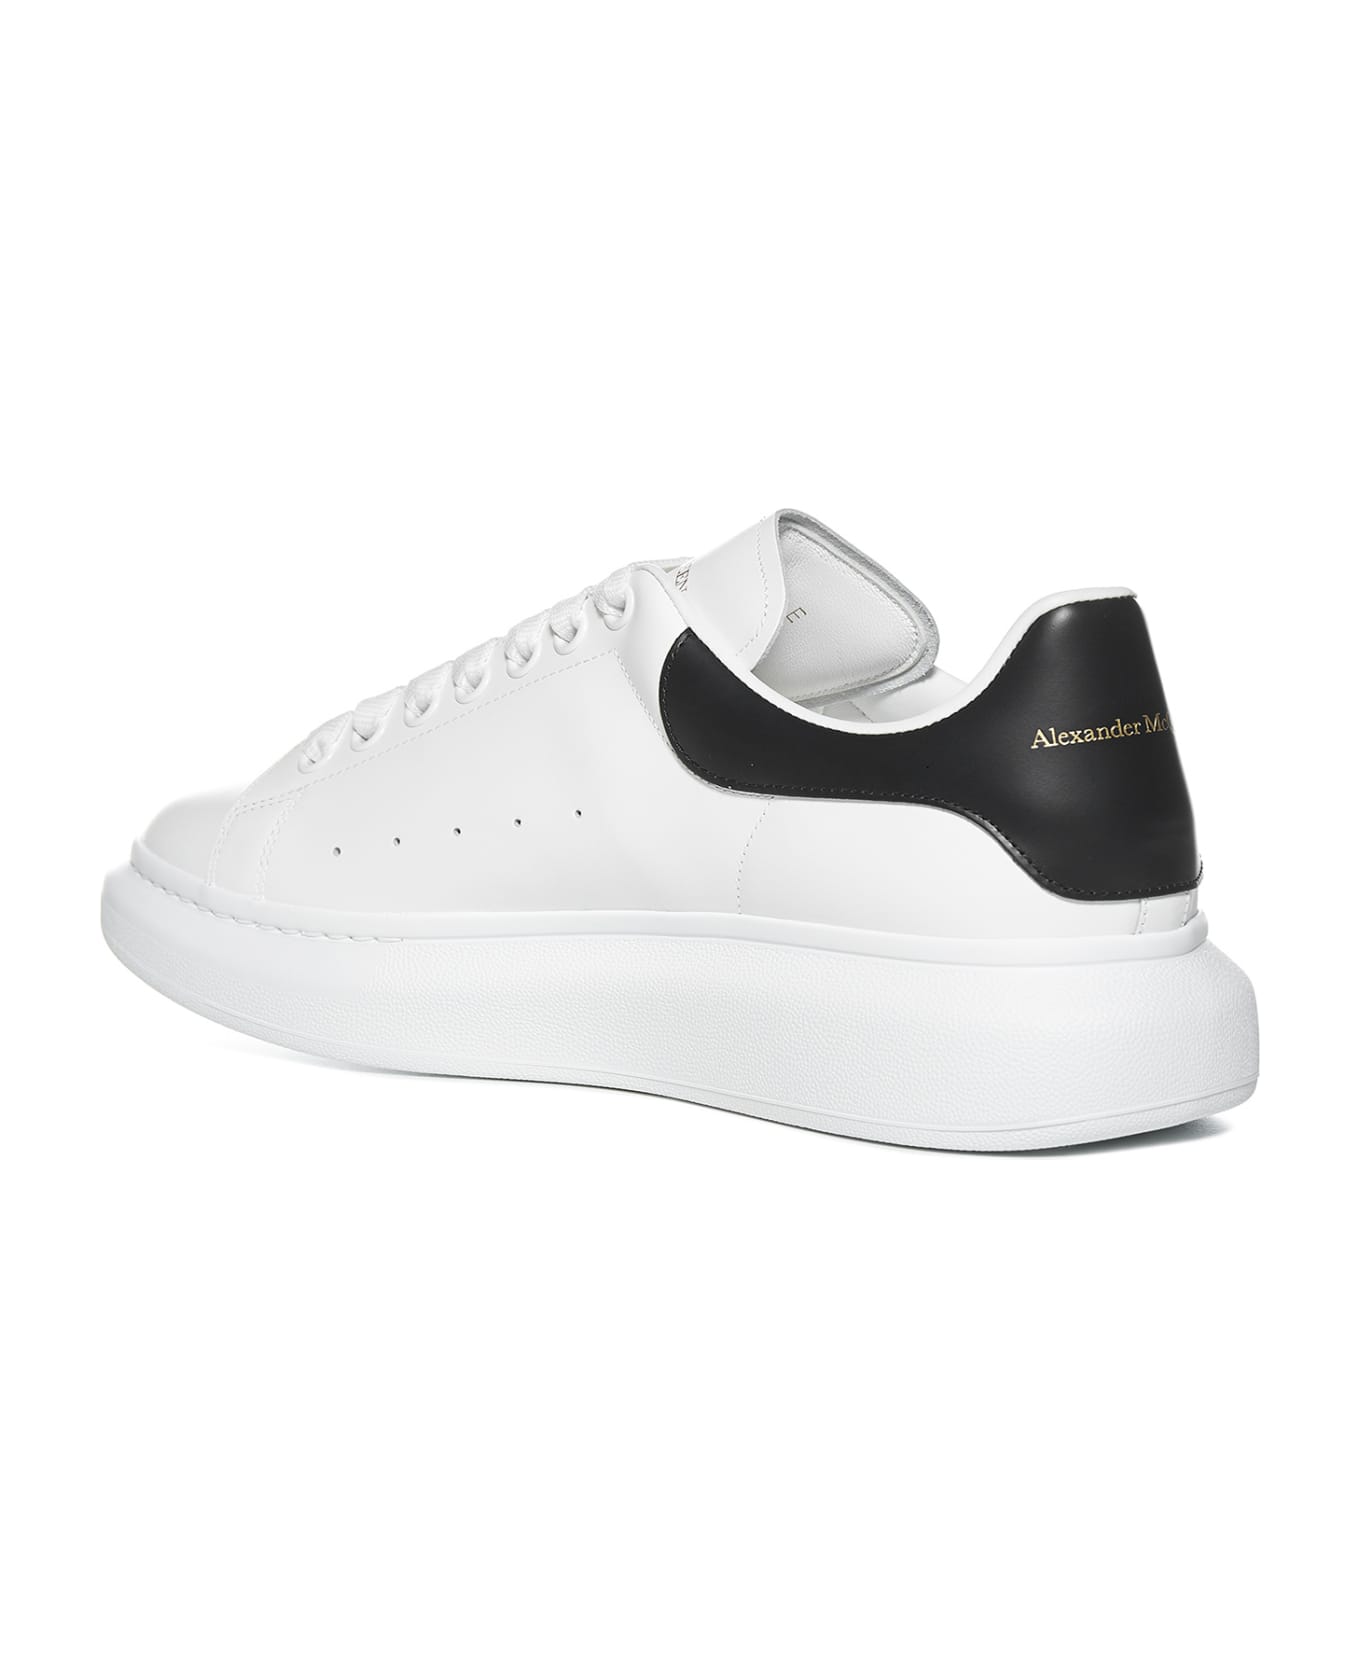 Alexander McQueen Oversize Leather Sneakers - White/black スニーカー